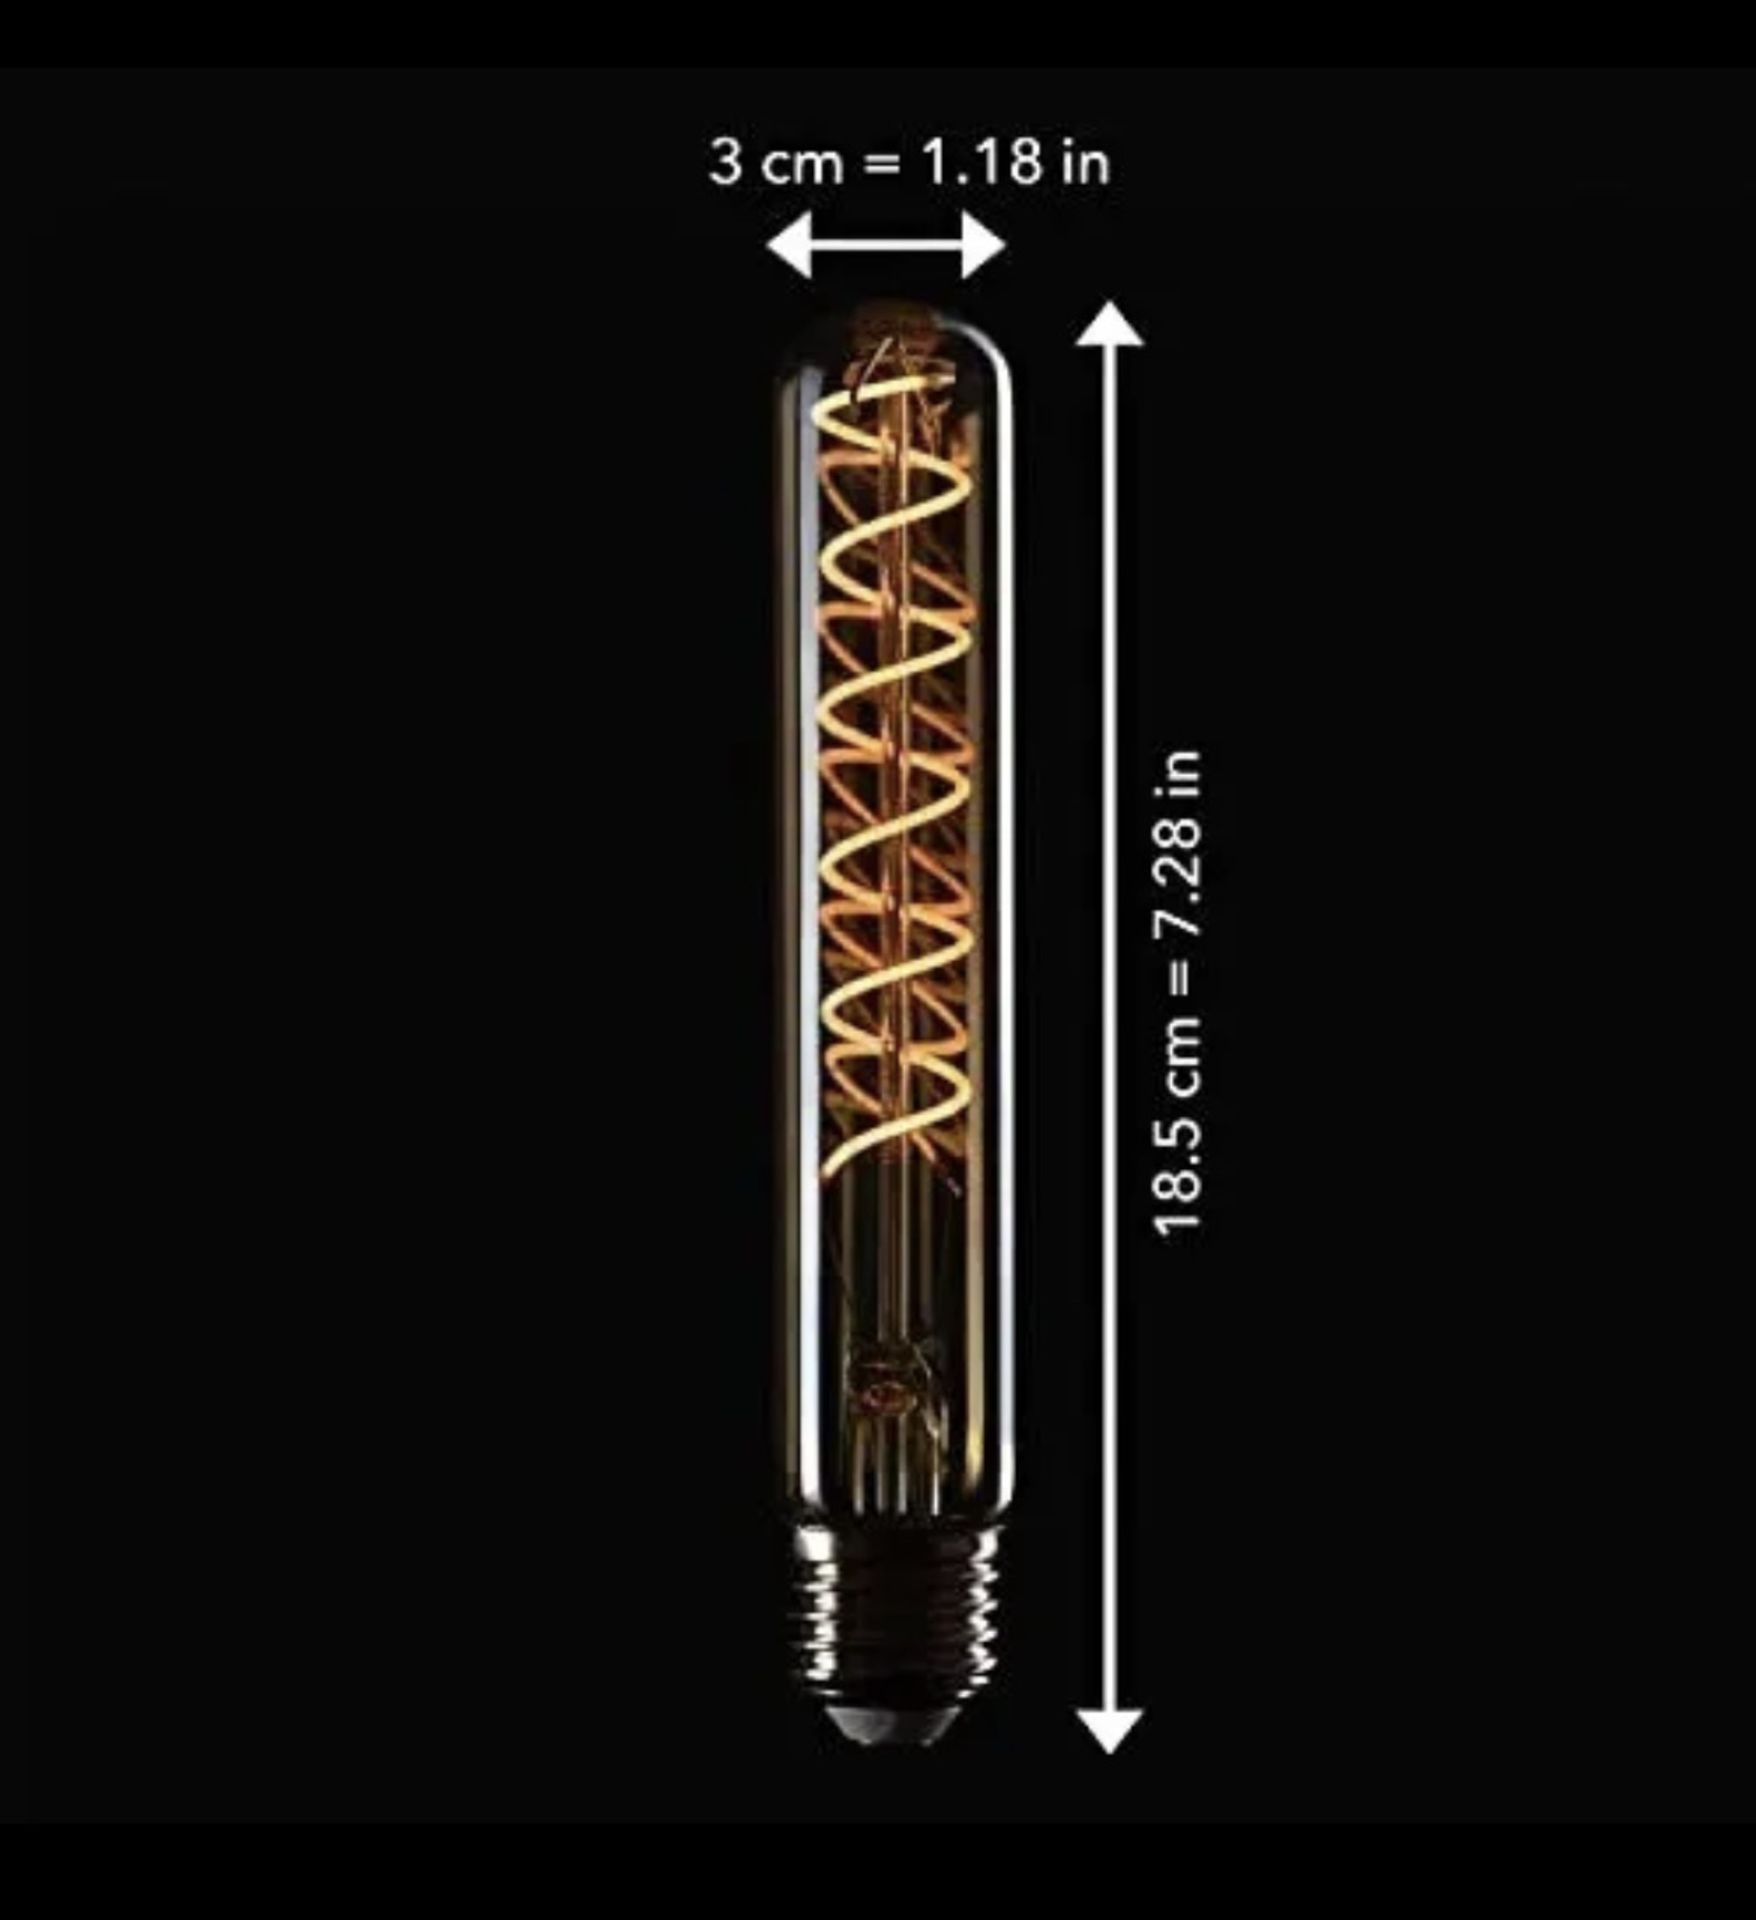 12 x CROWN LED Edison Flat Pipe Lightbulb 4W/40W Warm White - NEW & BOXED - BIG RRP! - Image 6 of 7